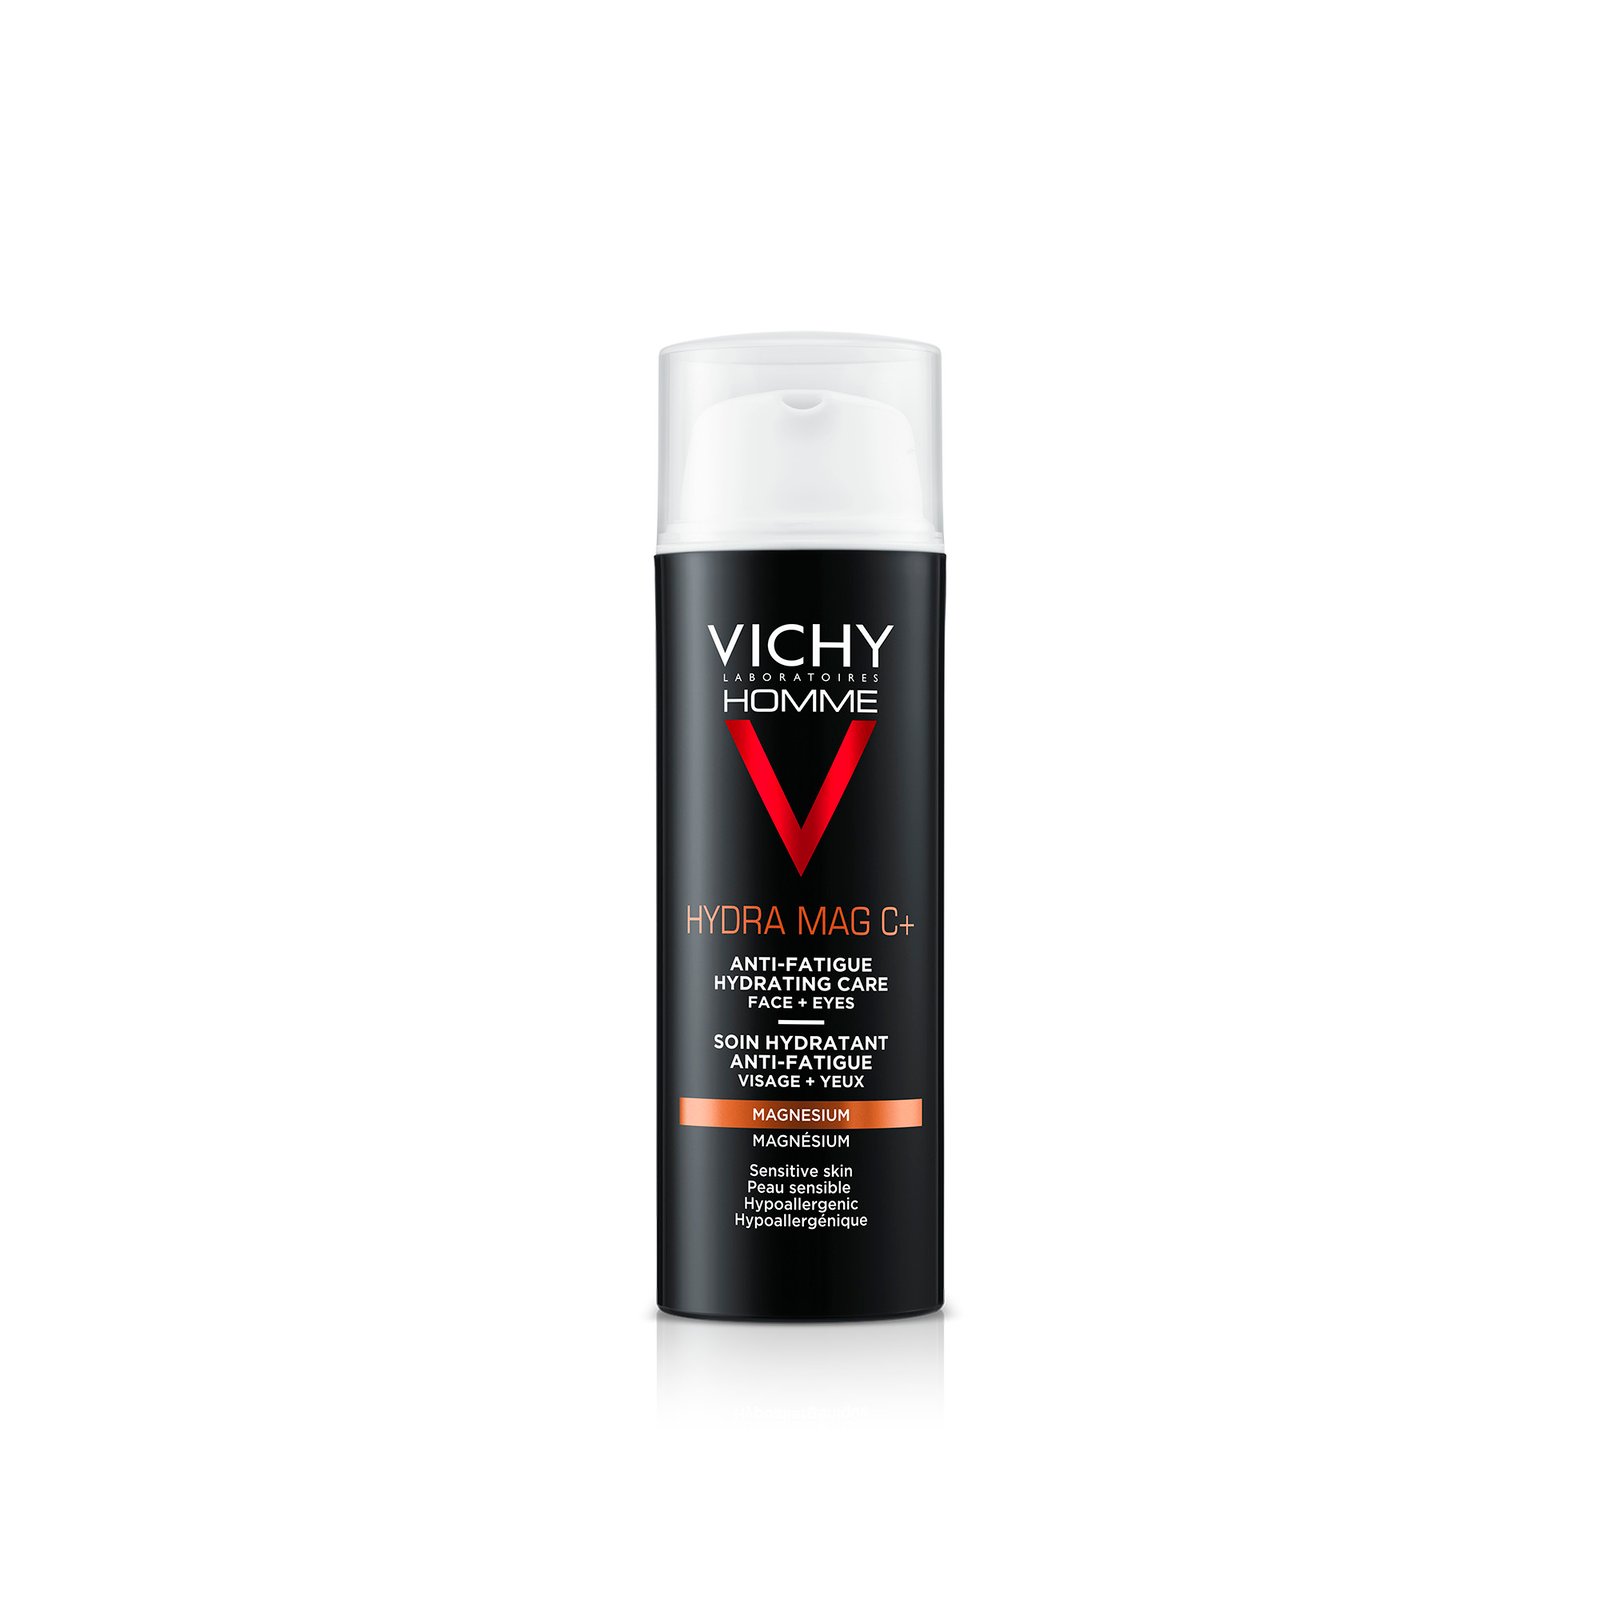 Vichy Homme Hydra Mag C+ Face & Eyes 50ml